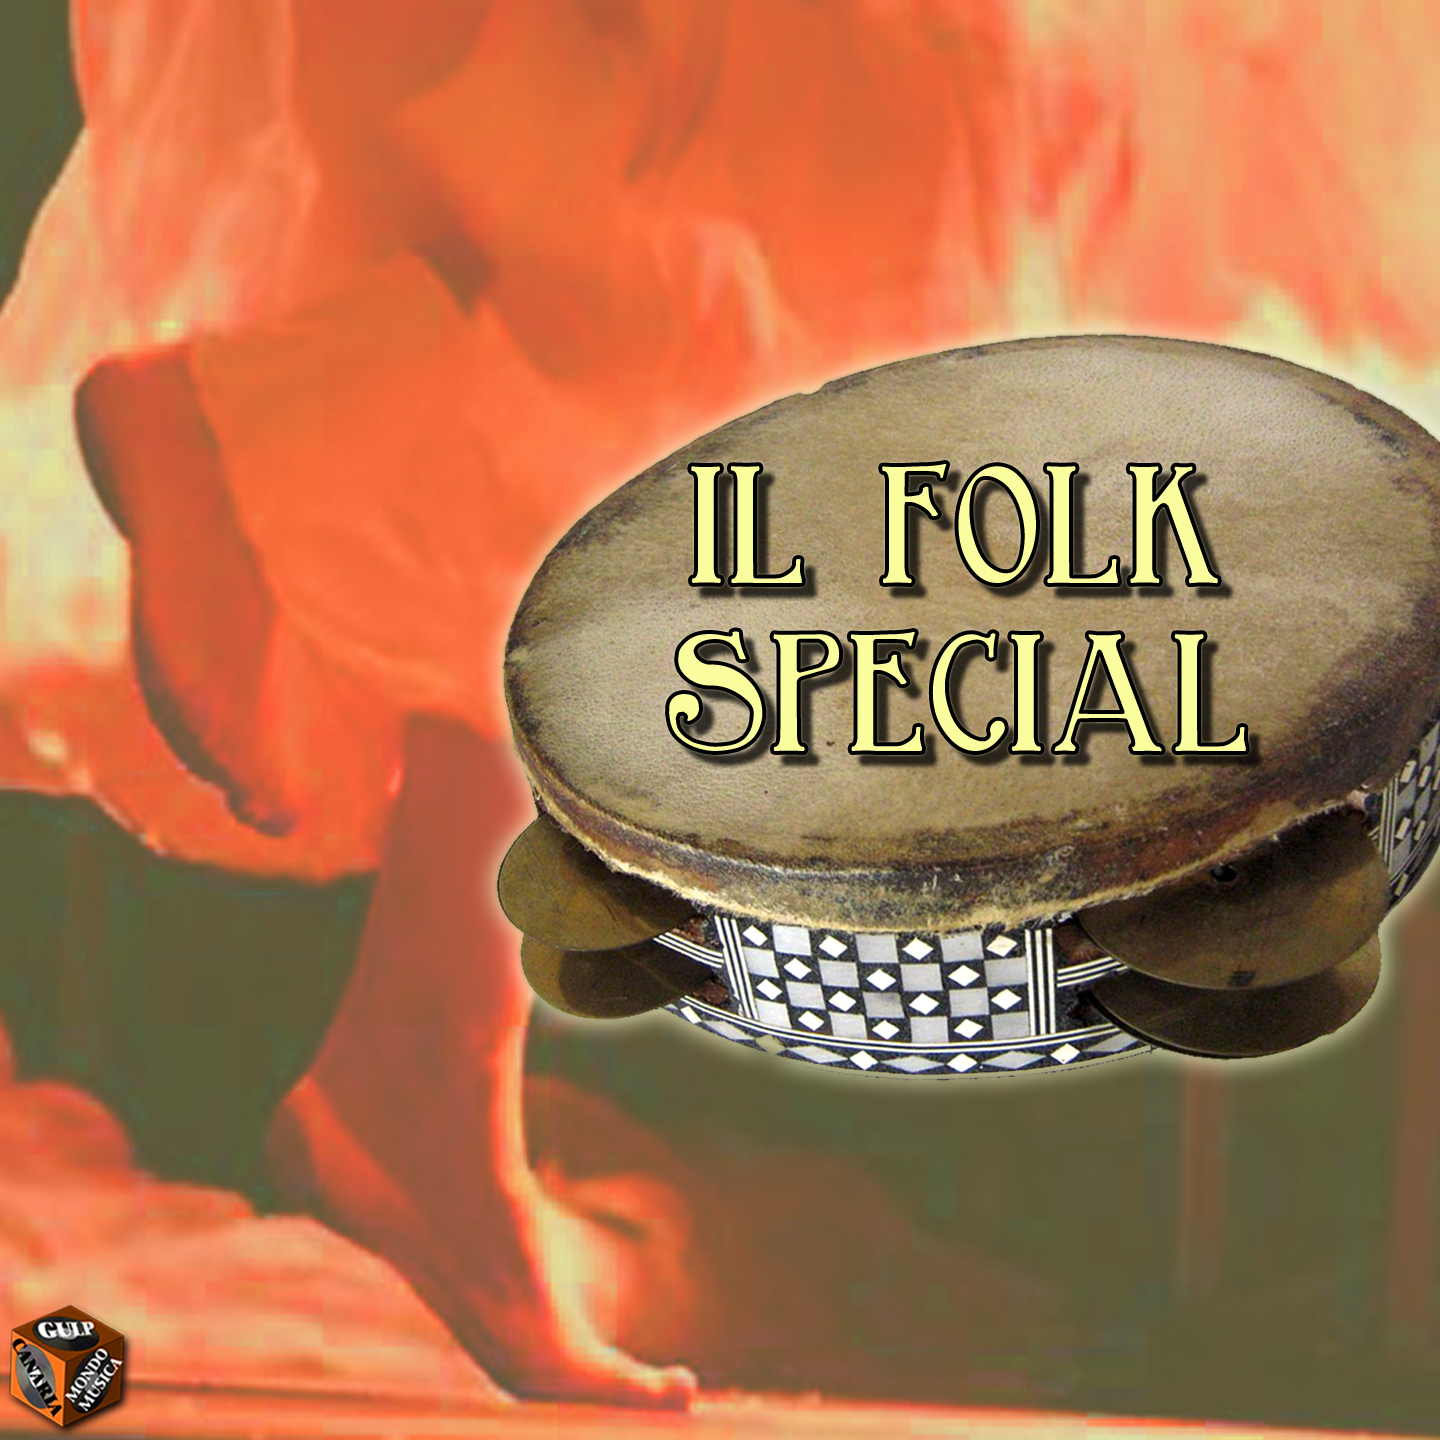 Il folk special